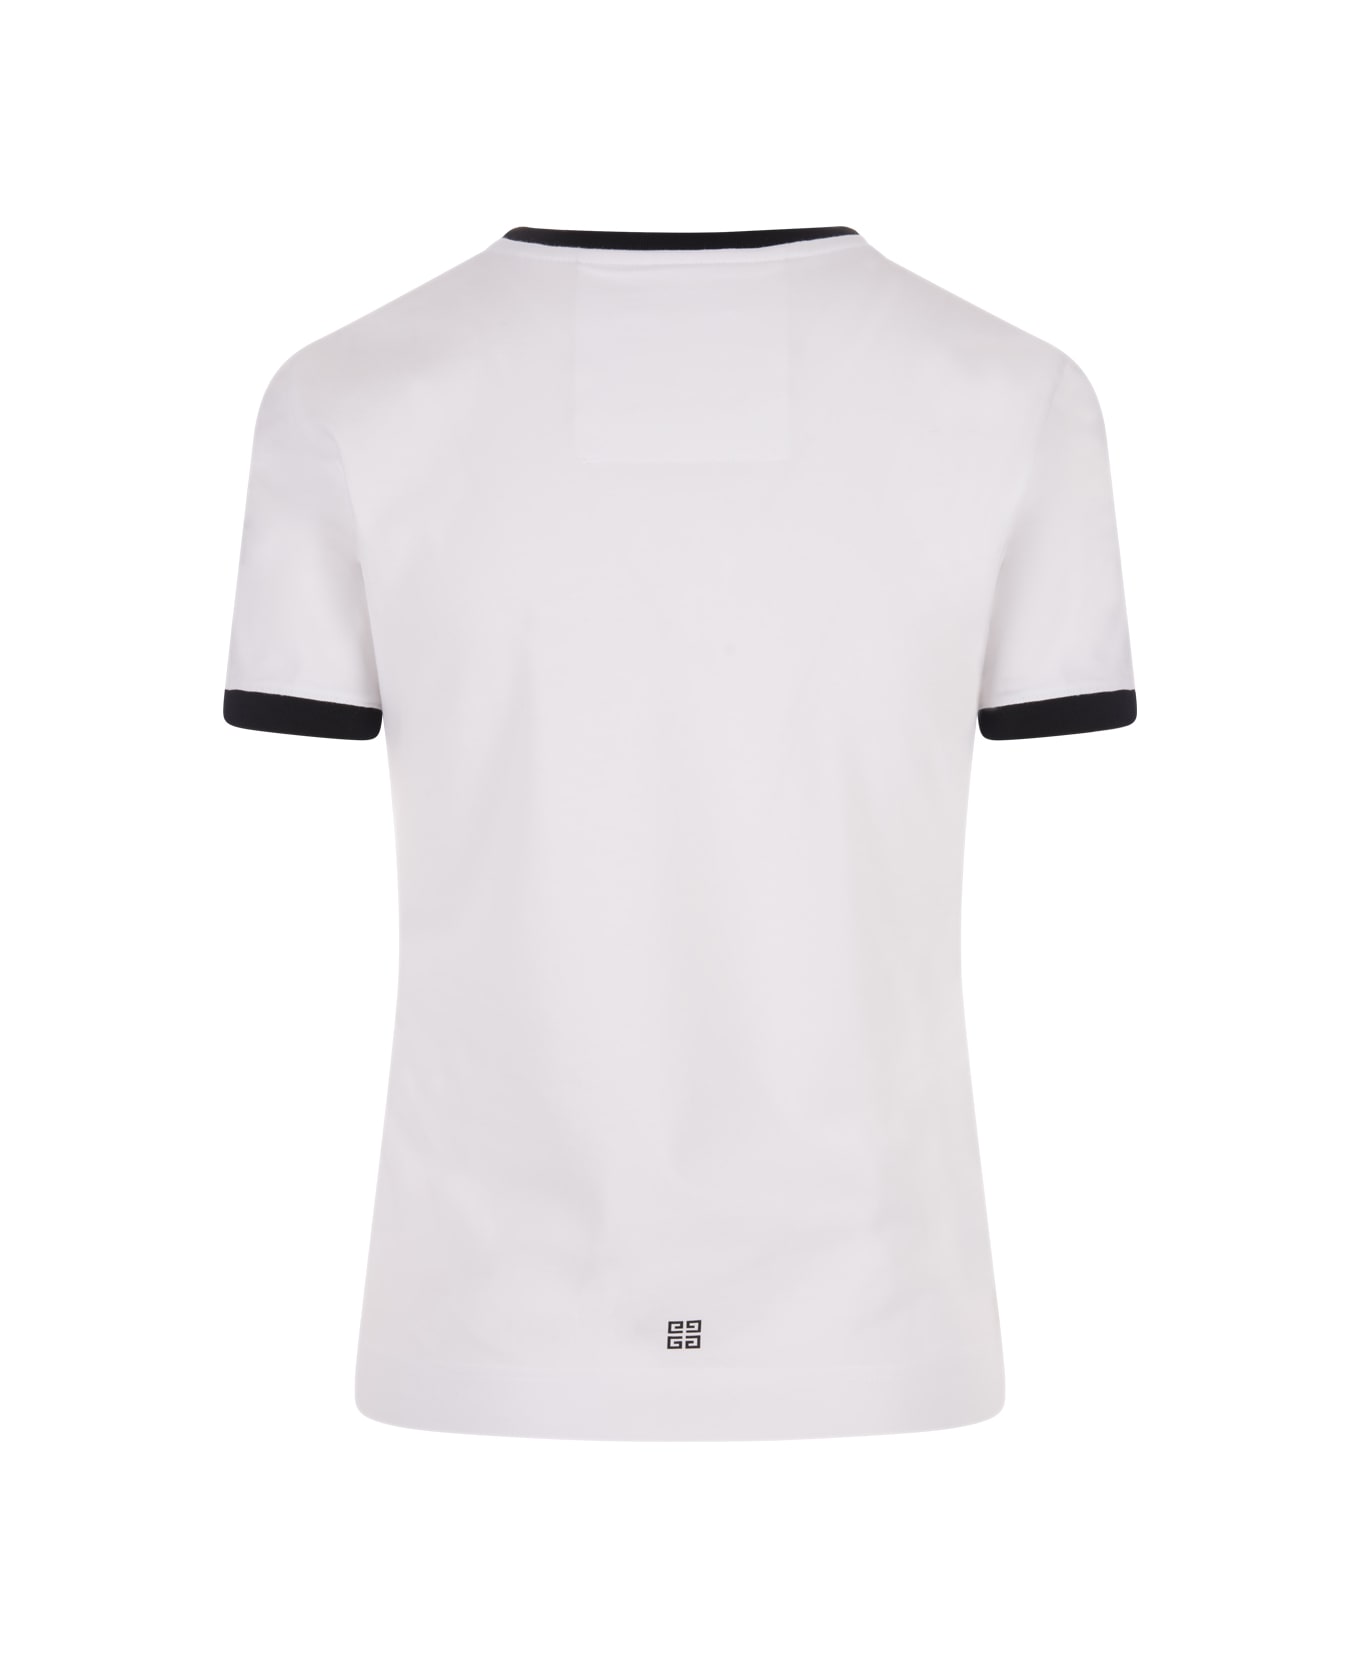 Givenchy Archetype Slim T-shirt In Black/white Cotton - White